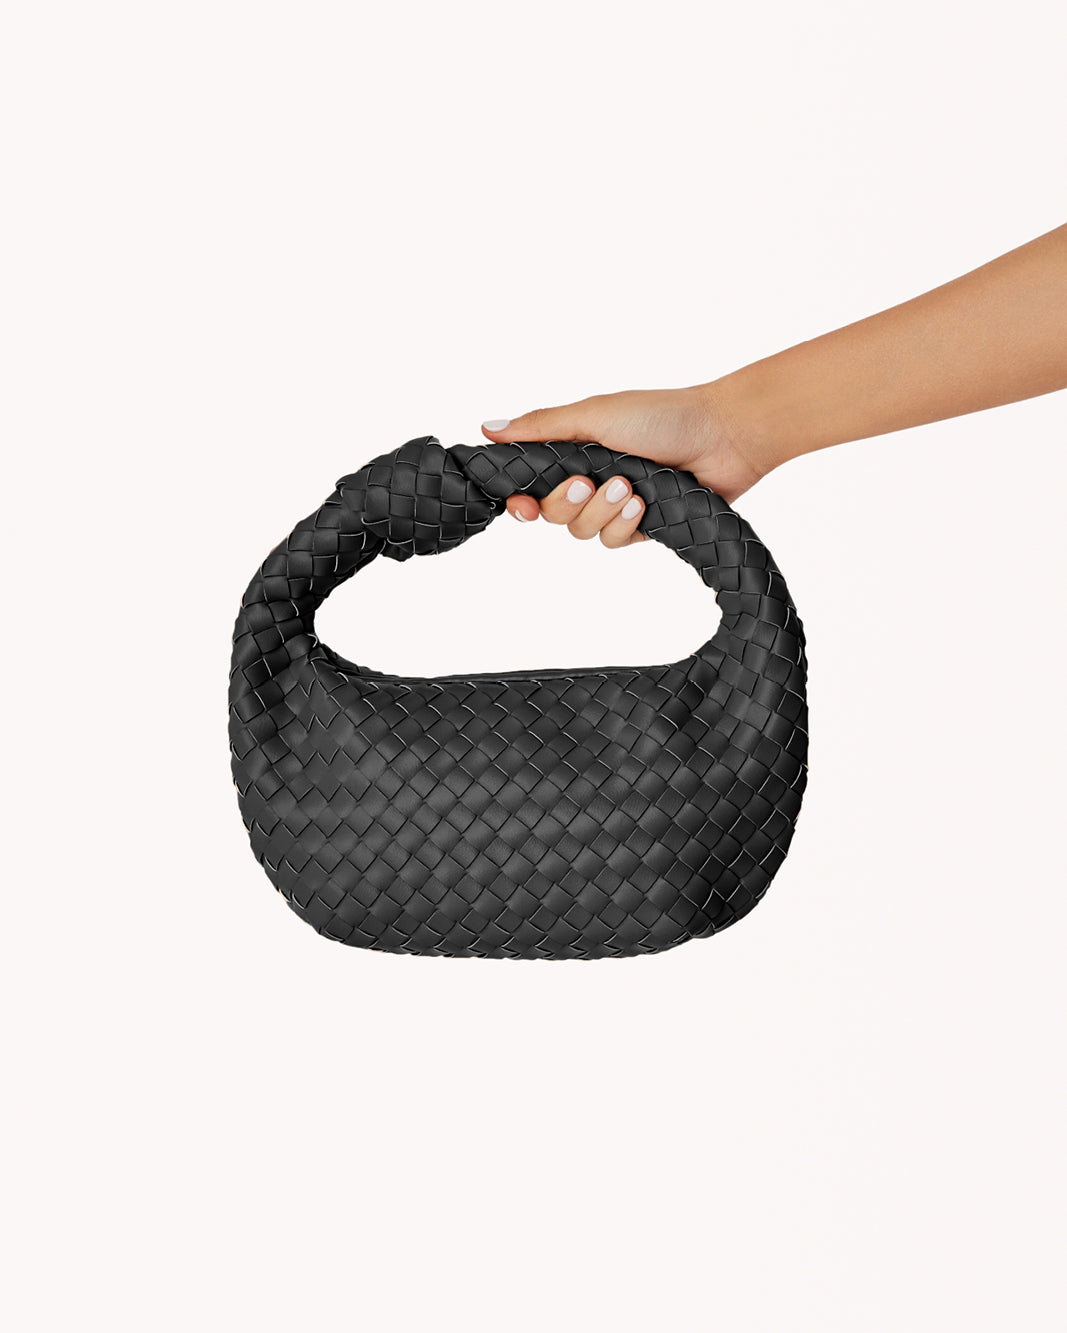 KERI SHOULDER BAG - BLACK-Handbags-Billini-O/S-Billini